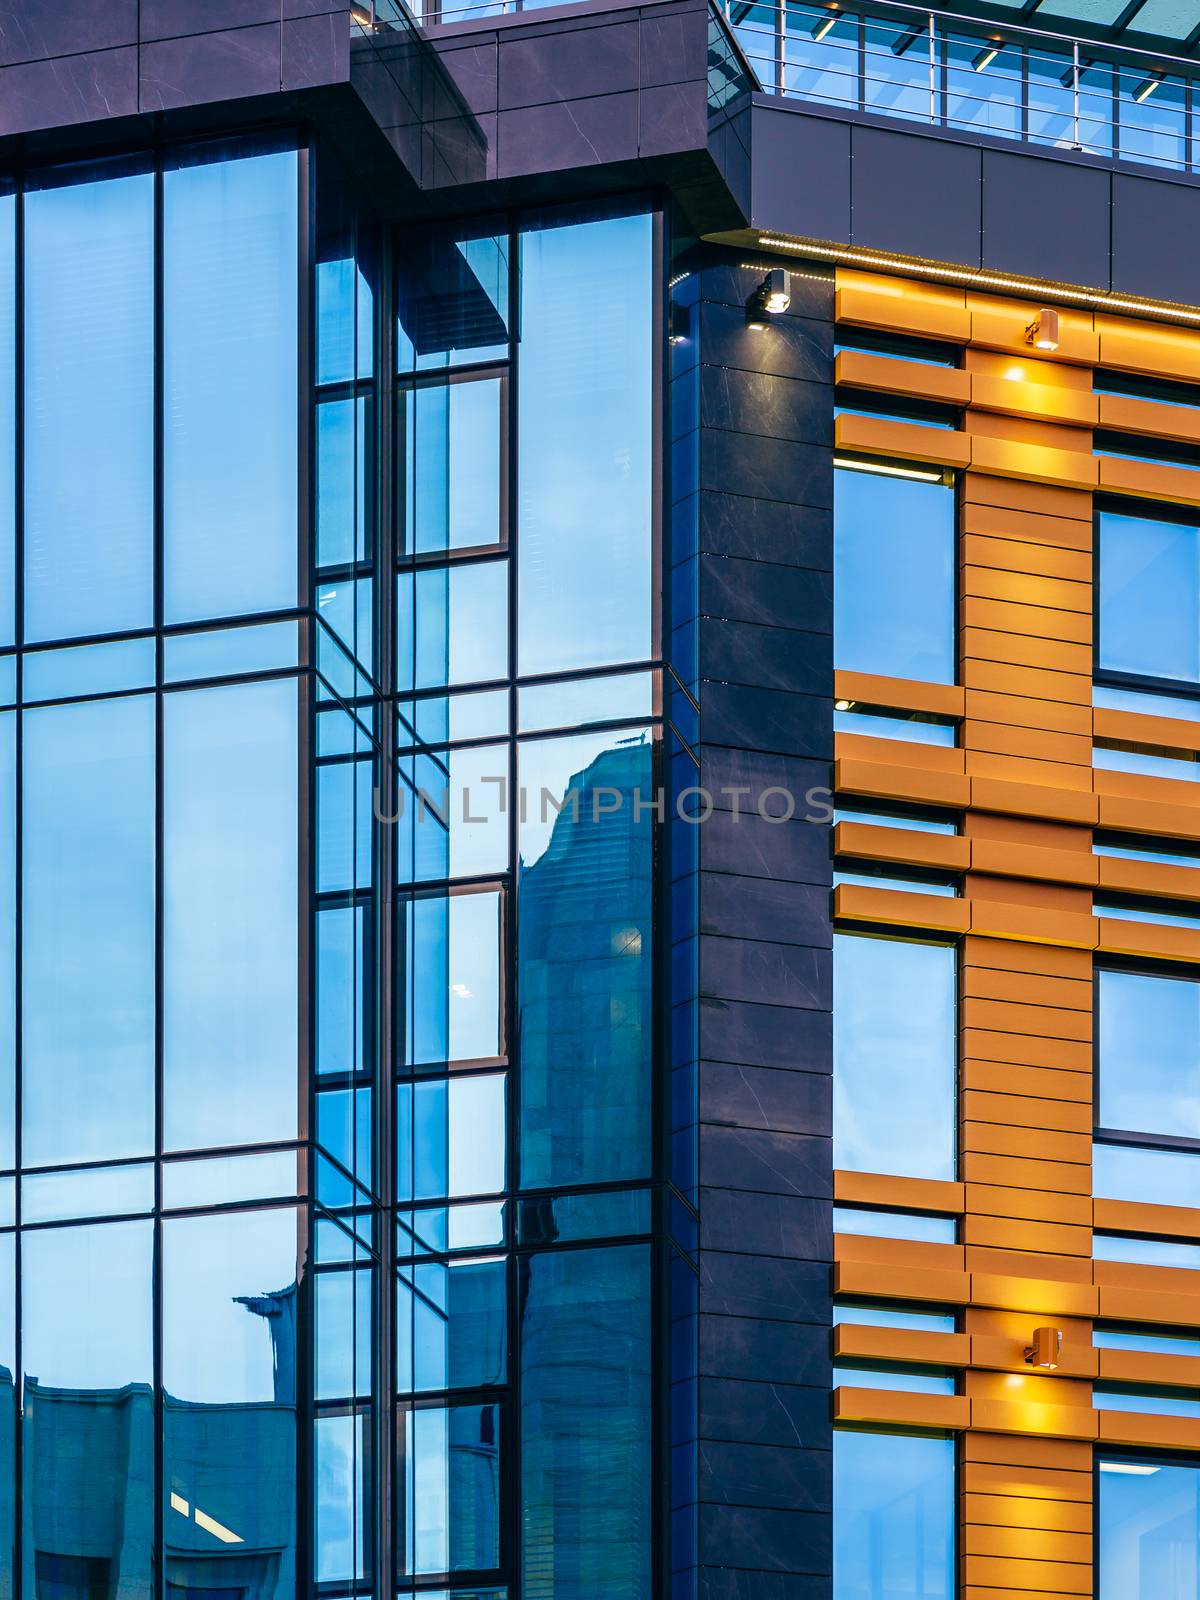 Modern building with a glass facade. by Seva_blsv